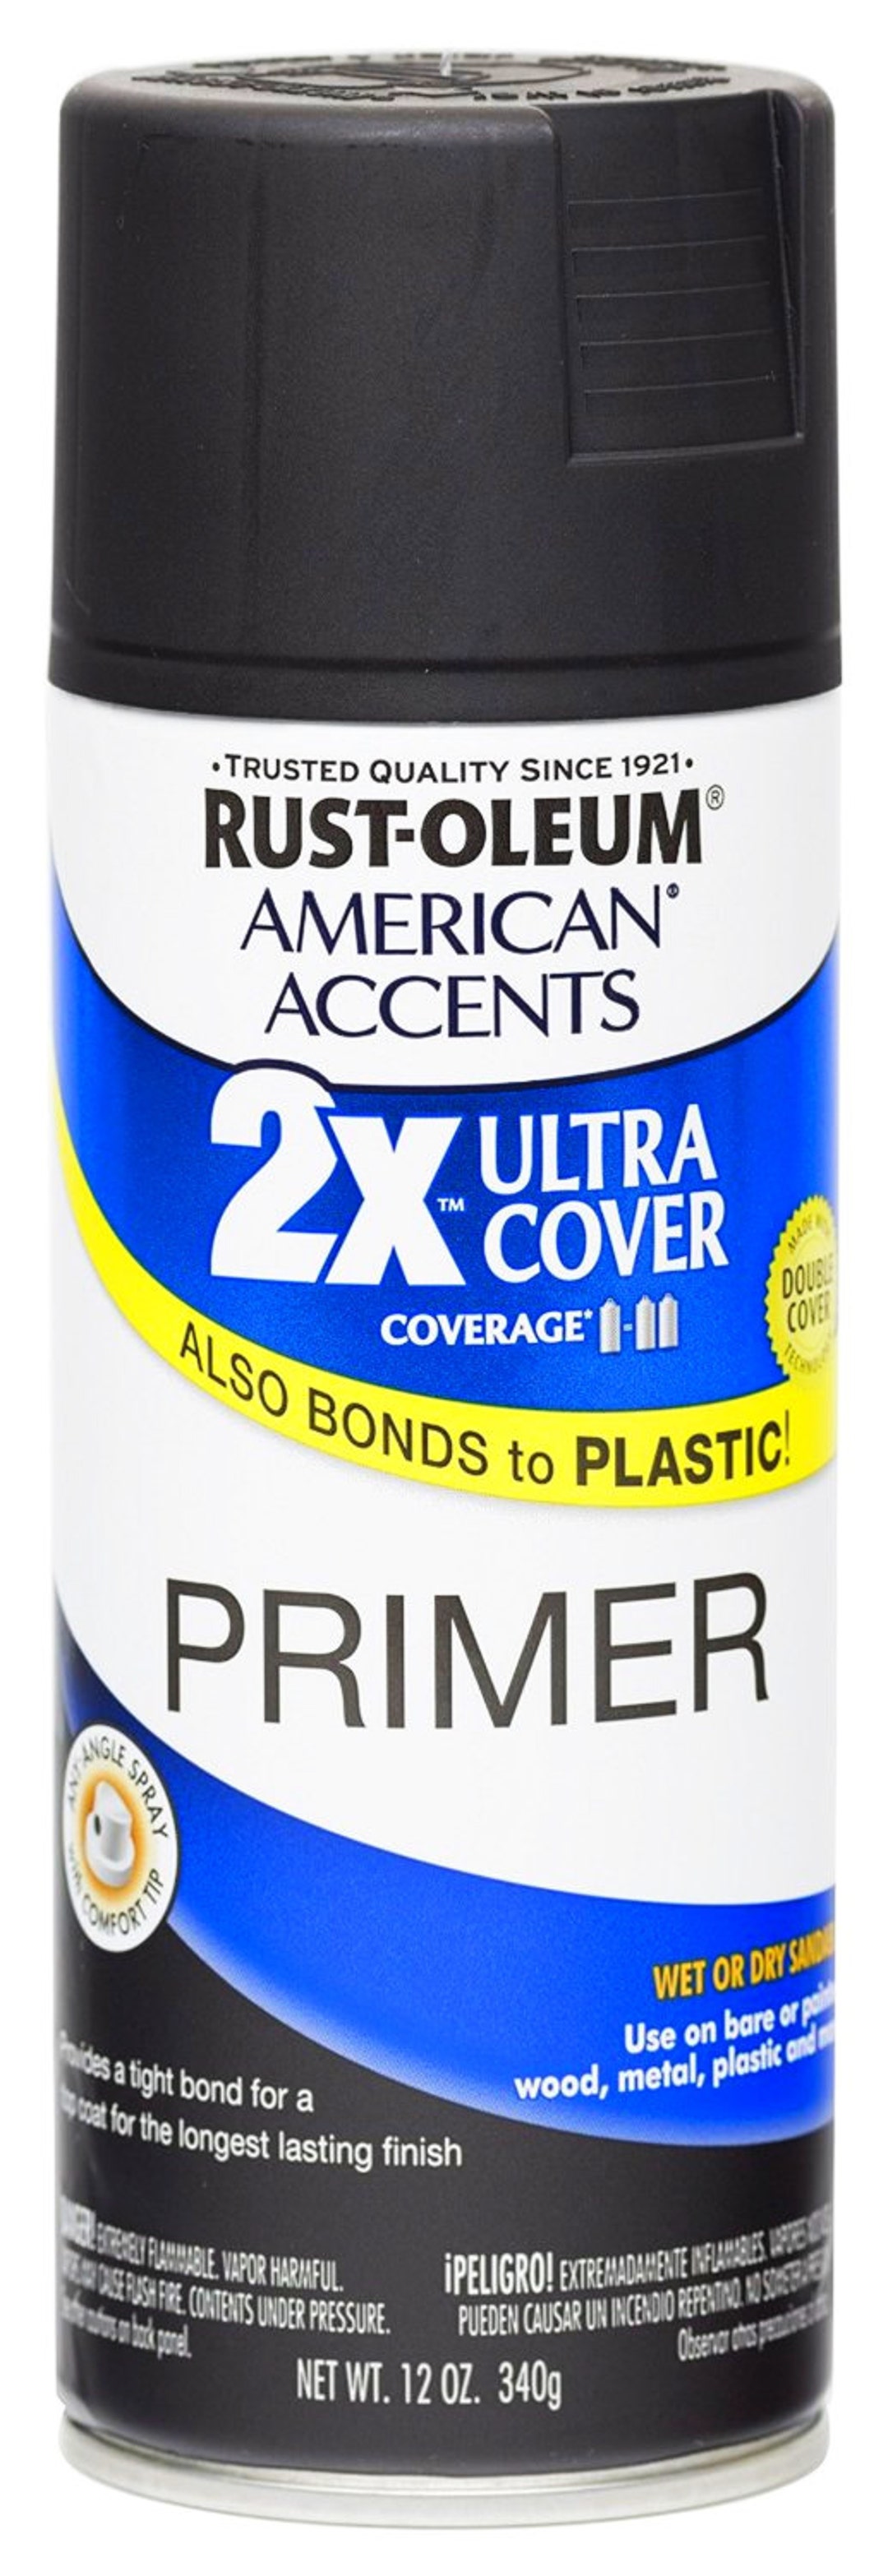 Rust-Oleum 327911 American Accents Ultra Cover 2x Primer Each, Black